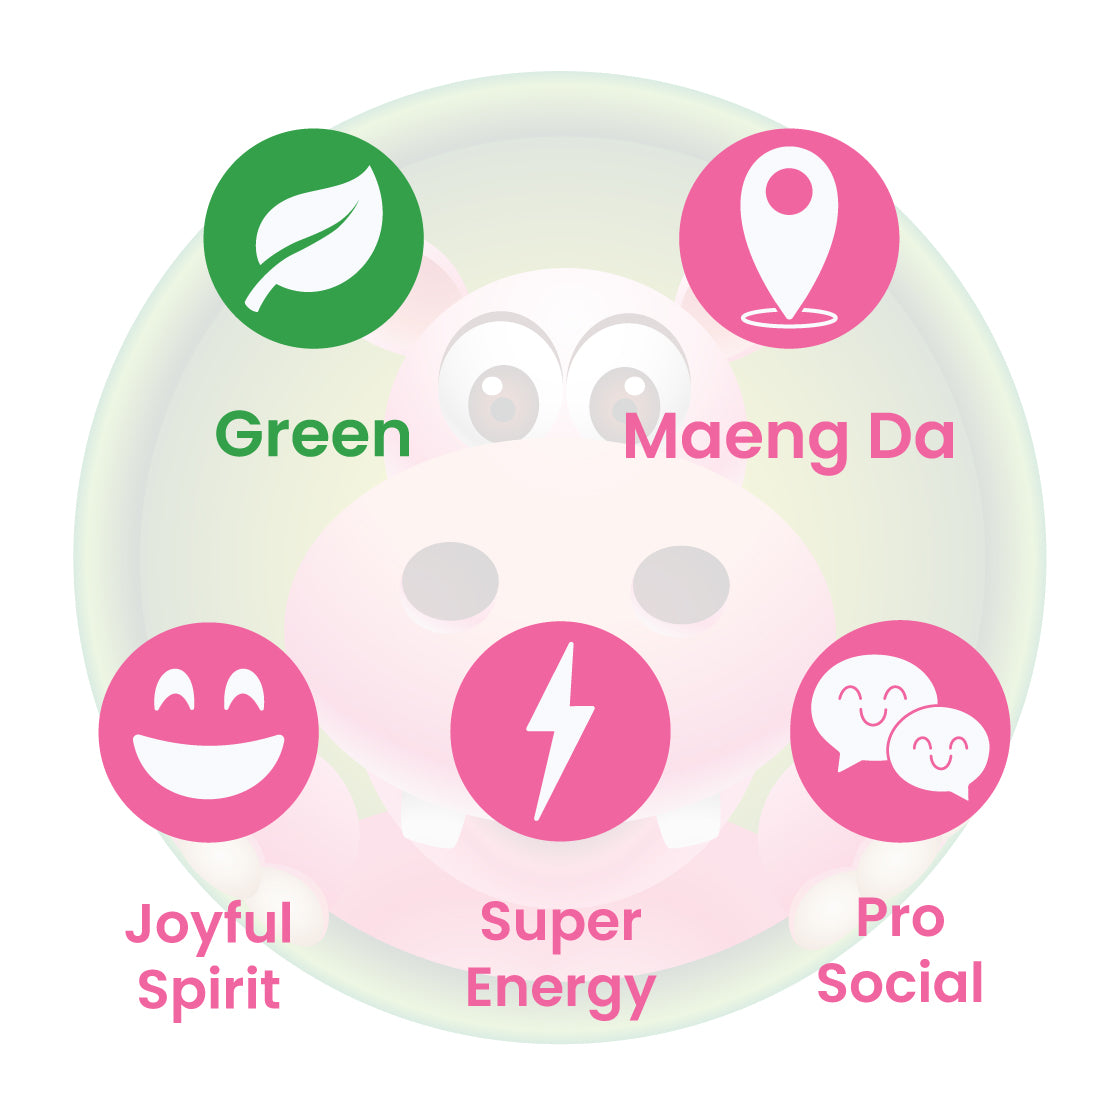 Infographic Details for Happy Hippo Green Vein Maeng Da Kratom Powder. Leaf color: Green Vein. Kratom Strain Origin: Maeng Da. Kratom Effects resonate with Super Energy, Pro-Social, and Joyful Spirit.